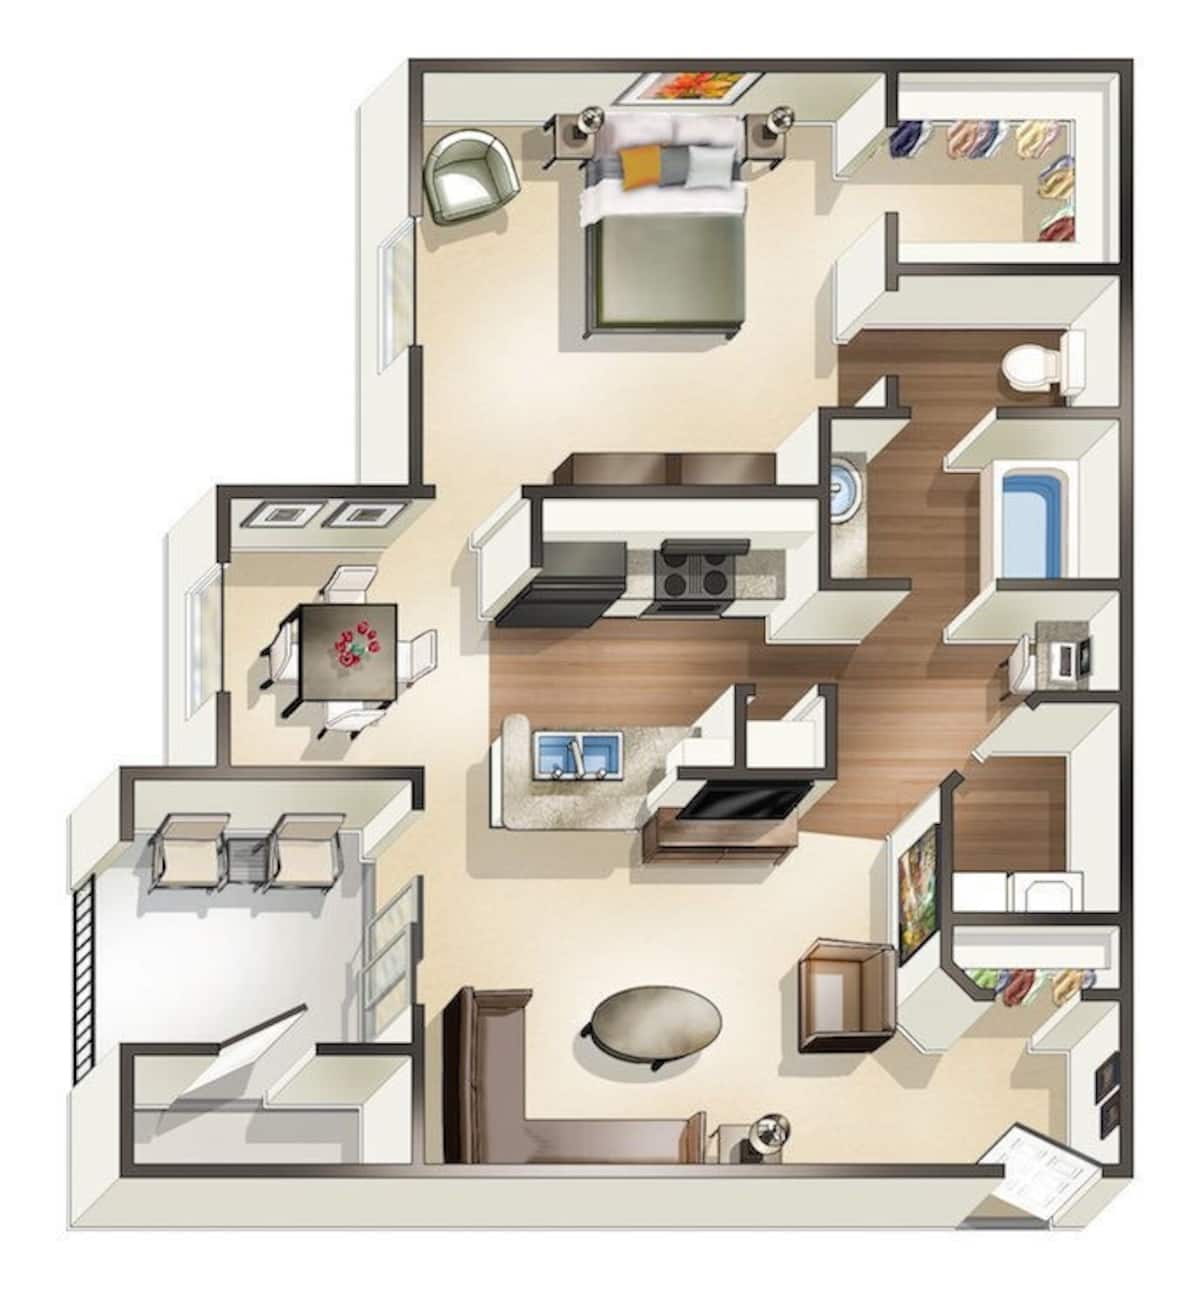 Floorplan diagram for A1C - R1, showing 1 bedroom